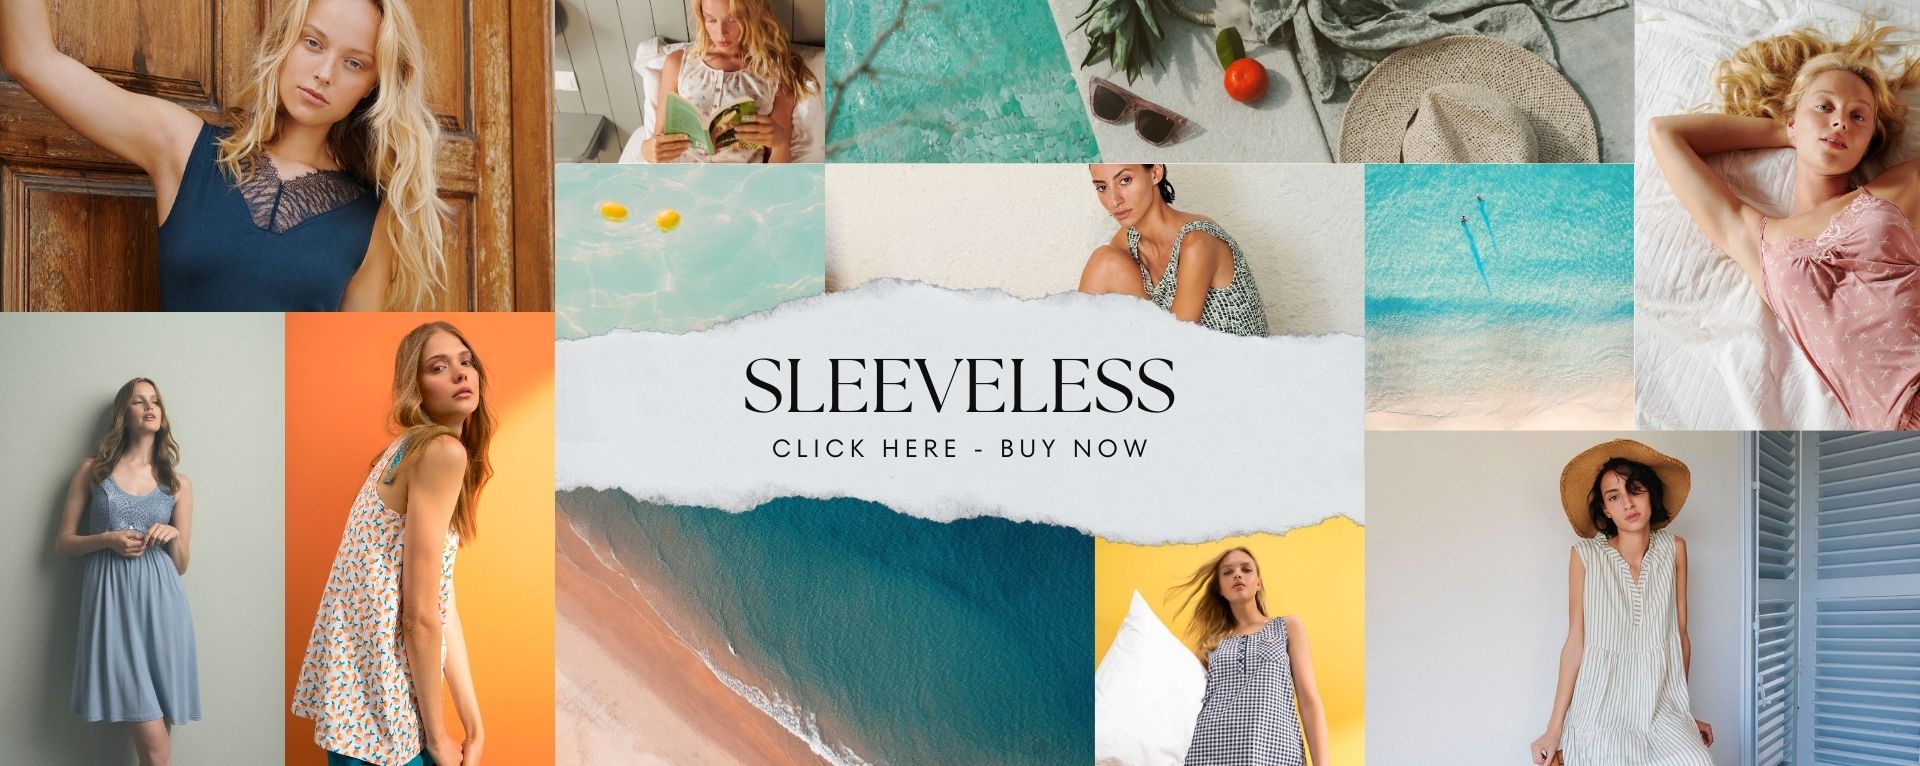 sleeveless_stock_banner_pc